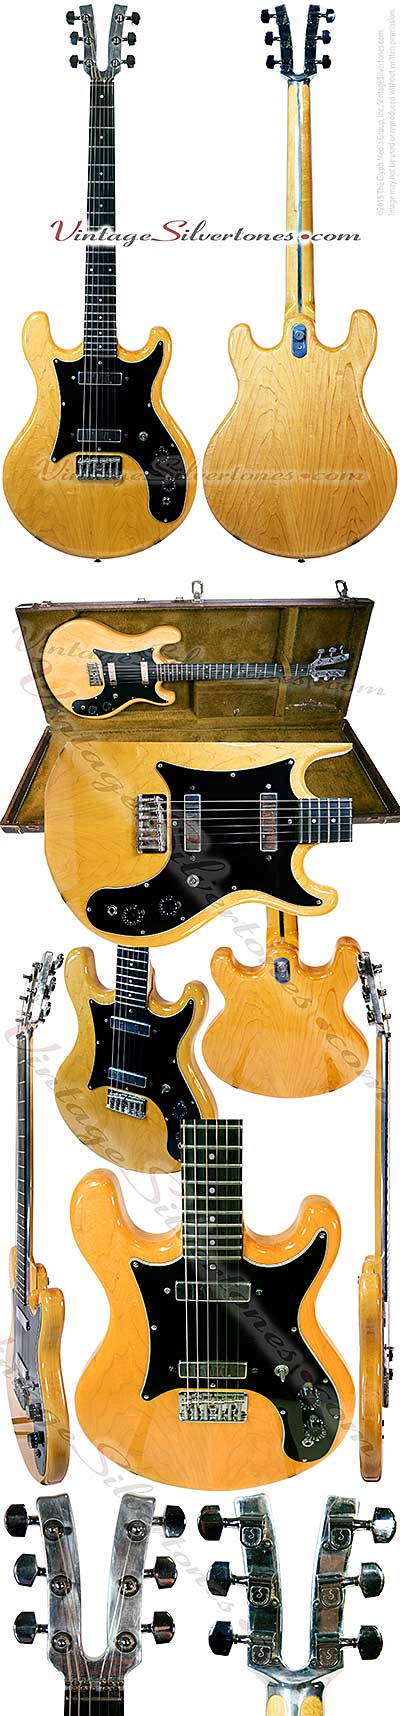 Kramer 250g-Neptune, NJ 2 pickup, electric guitar, 1978, blonde, black pickguard, double cutaway